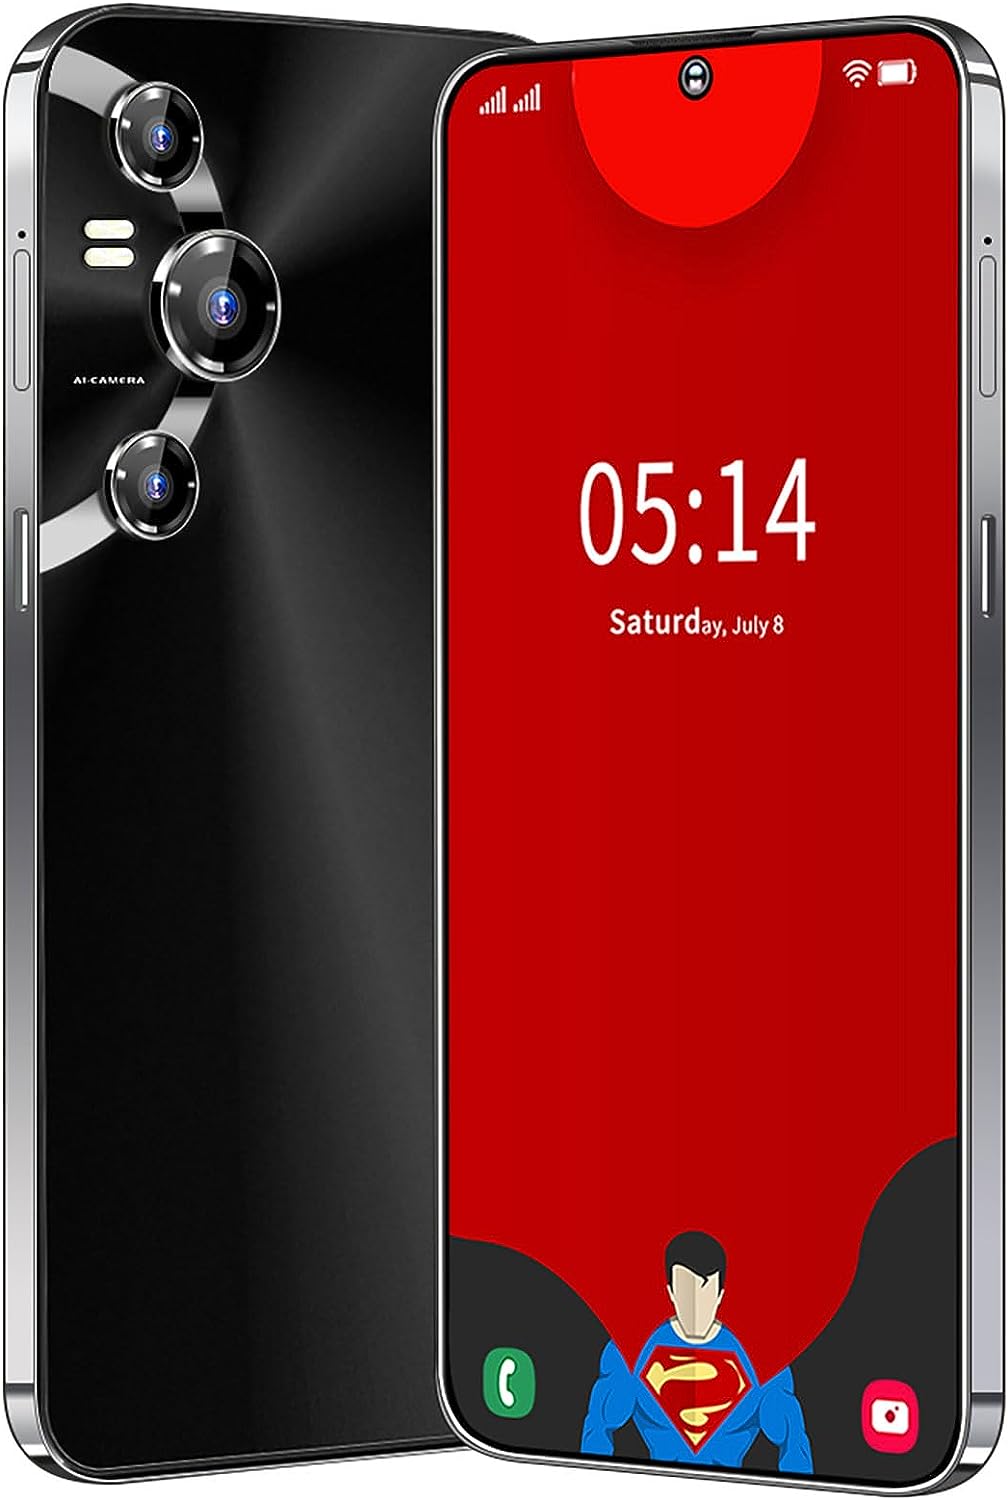 VIQEE Phones U21, 5G Unlocked Phones, 2K FHD+ Screen, Mobile Phones 6GB+256GB ROM+TF 128GB, Snapdragon Gen2 Processor, Smartphone Android Camera 24MP+64+12+12MP, WiFi NFC, Dual Sim - Black